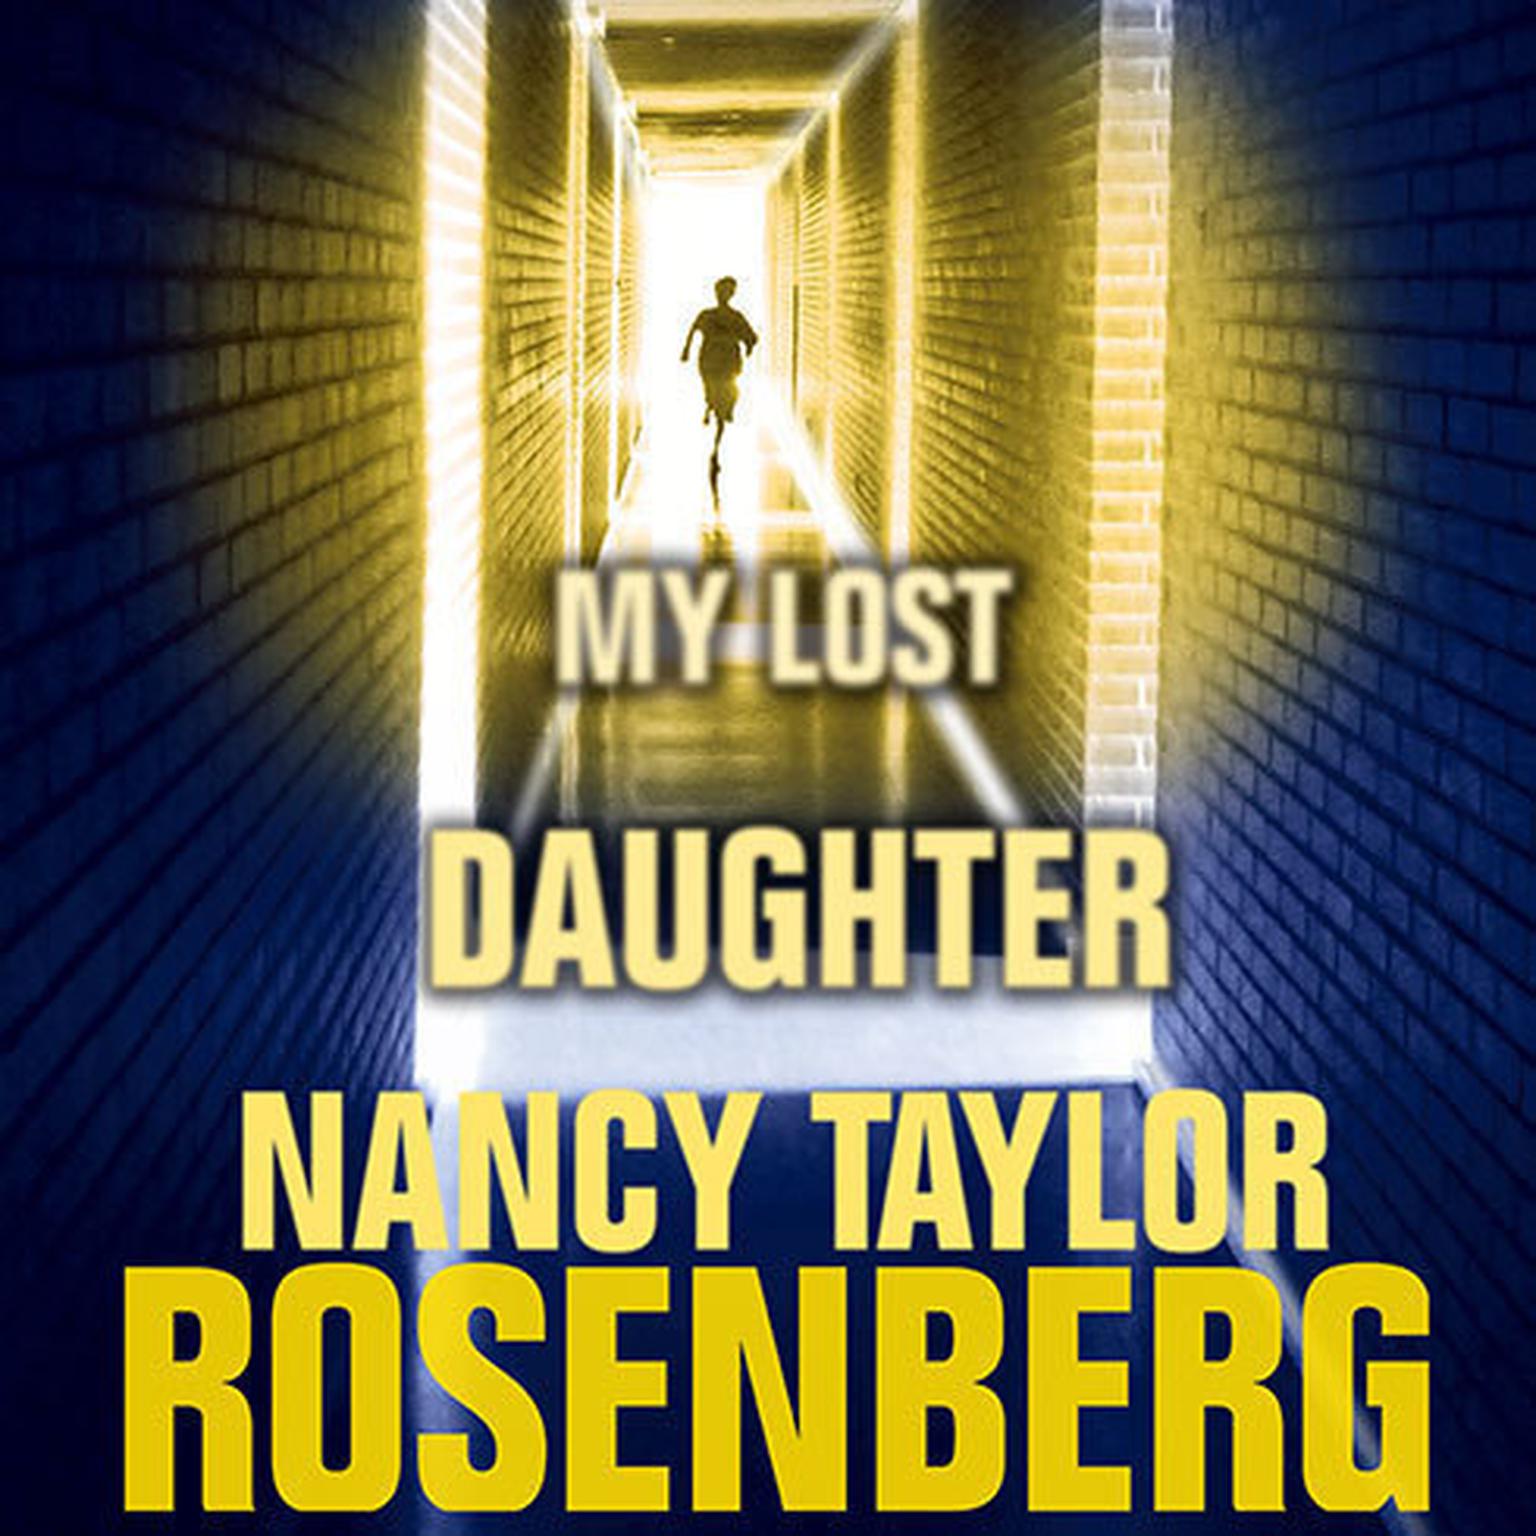 My Lost Daughter Audiobook, by Nancy Taylor Rosenberg